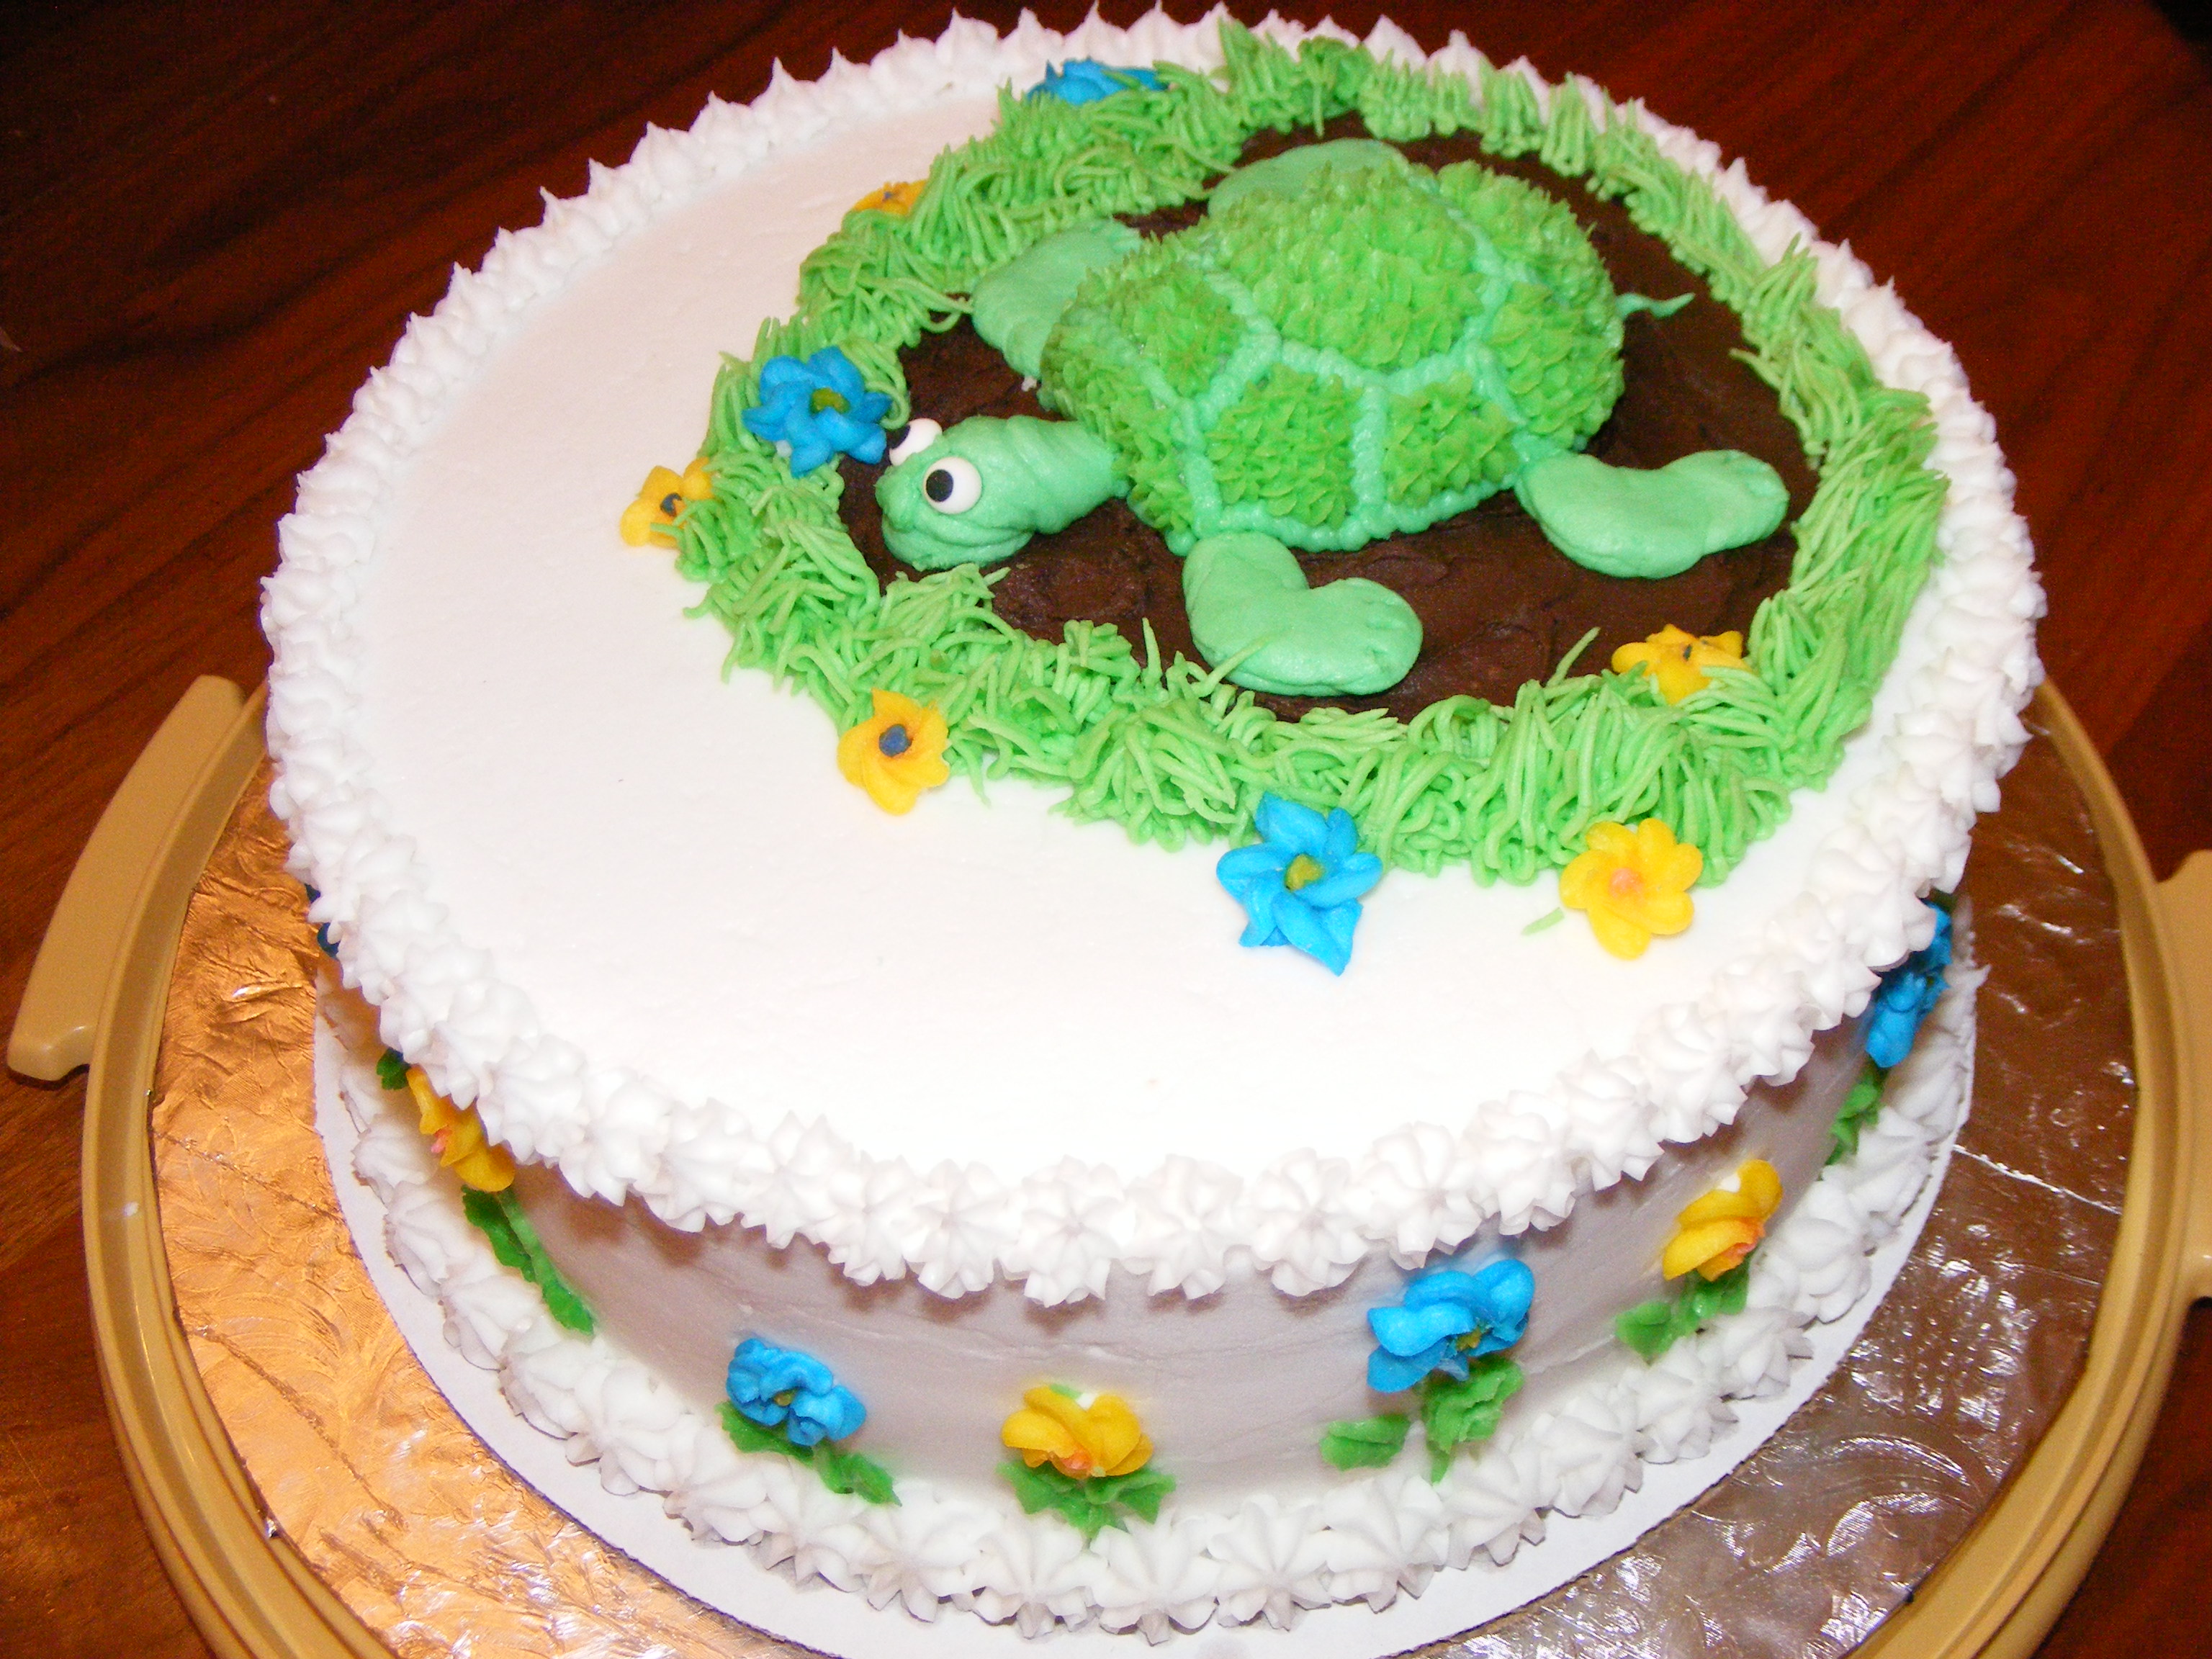 Turtle cake - Decoration Ideas | Little Birthday Cakes